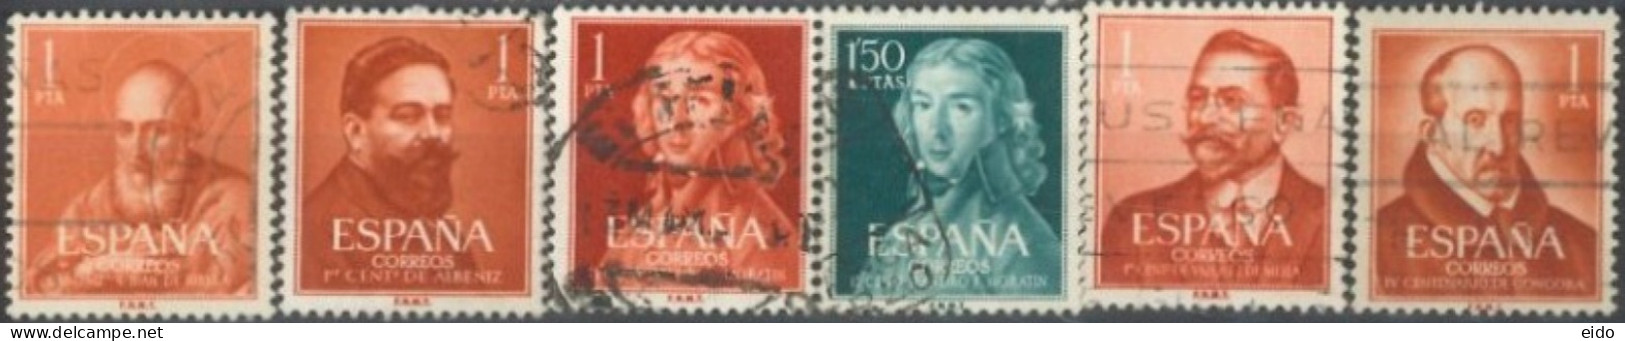 SPAIN, 1960/61, SAINTS & CELEBRITIES STAMPS SET OF 6, USED. - Gebraucht